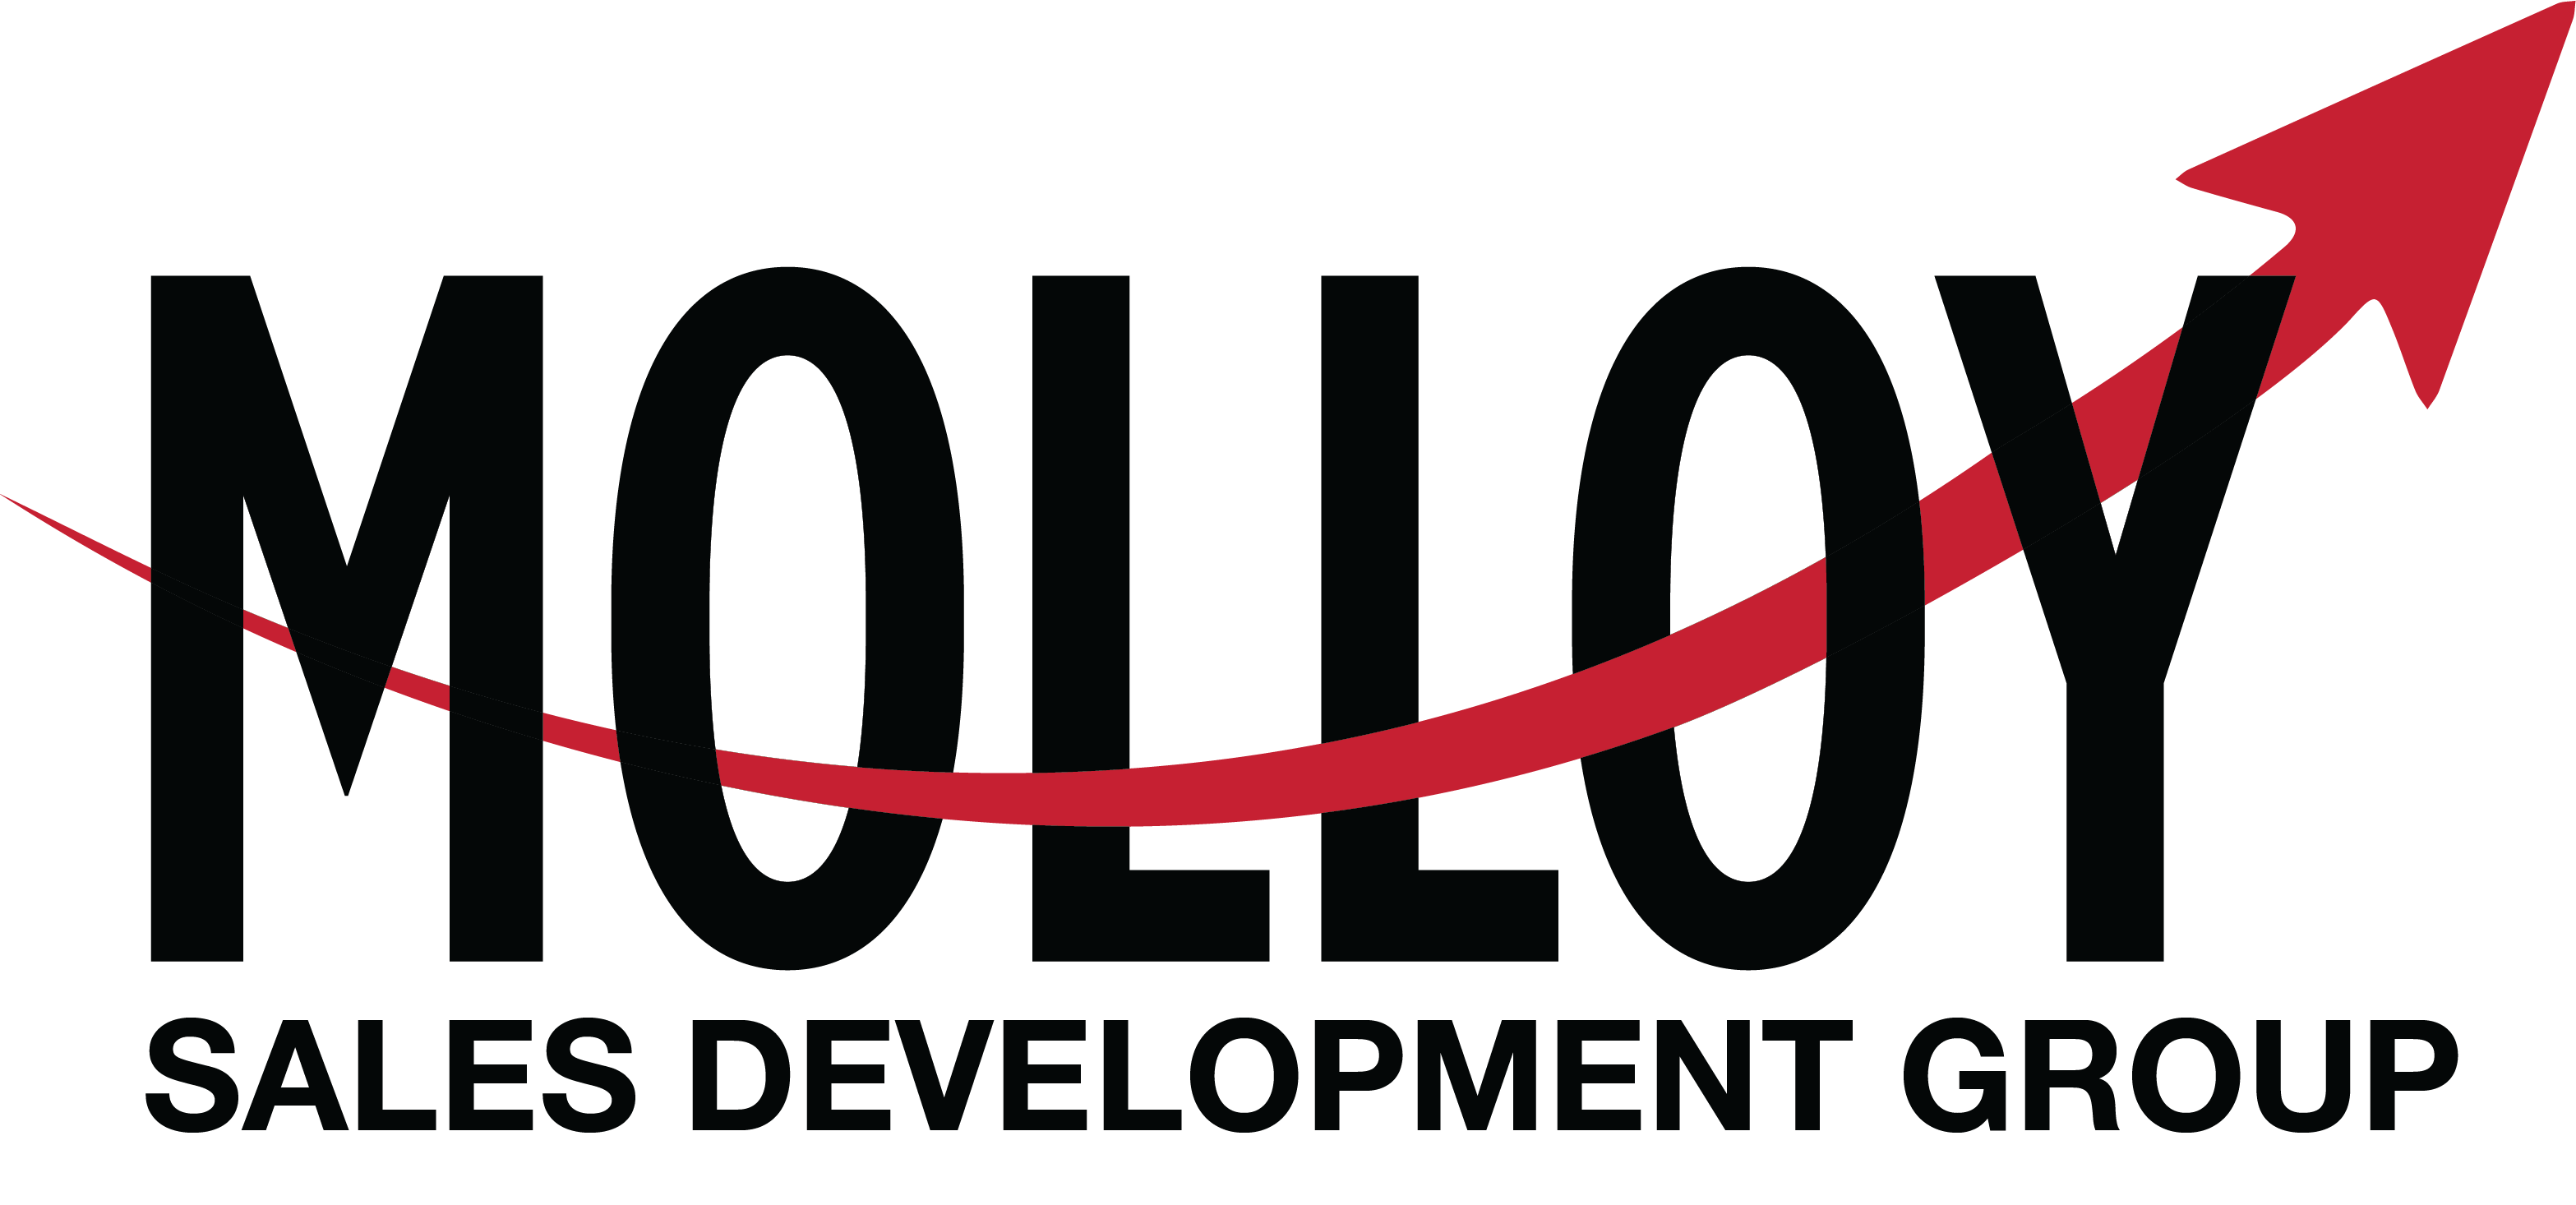 Molloy Sales Development Group Logo